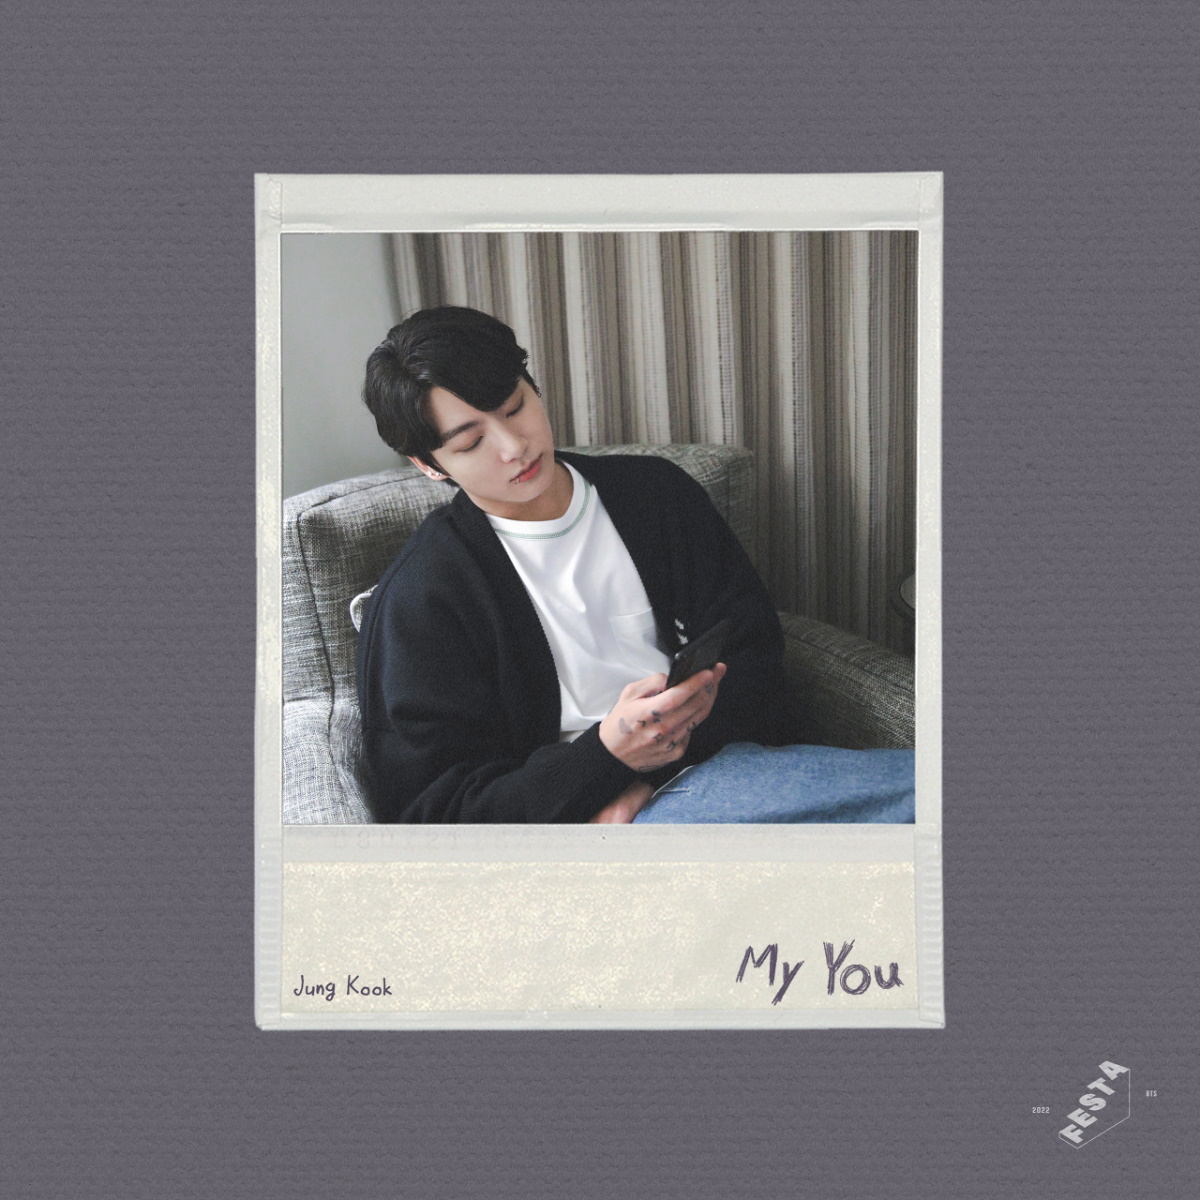 『Jung Kook (BTS) - My You』収録の『My You』ジャケット